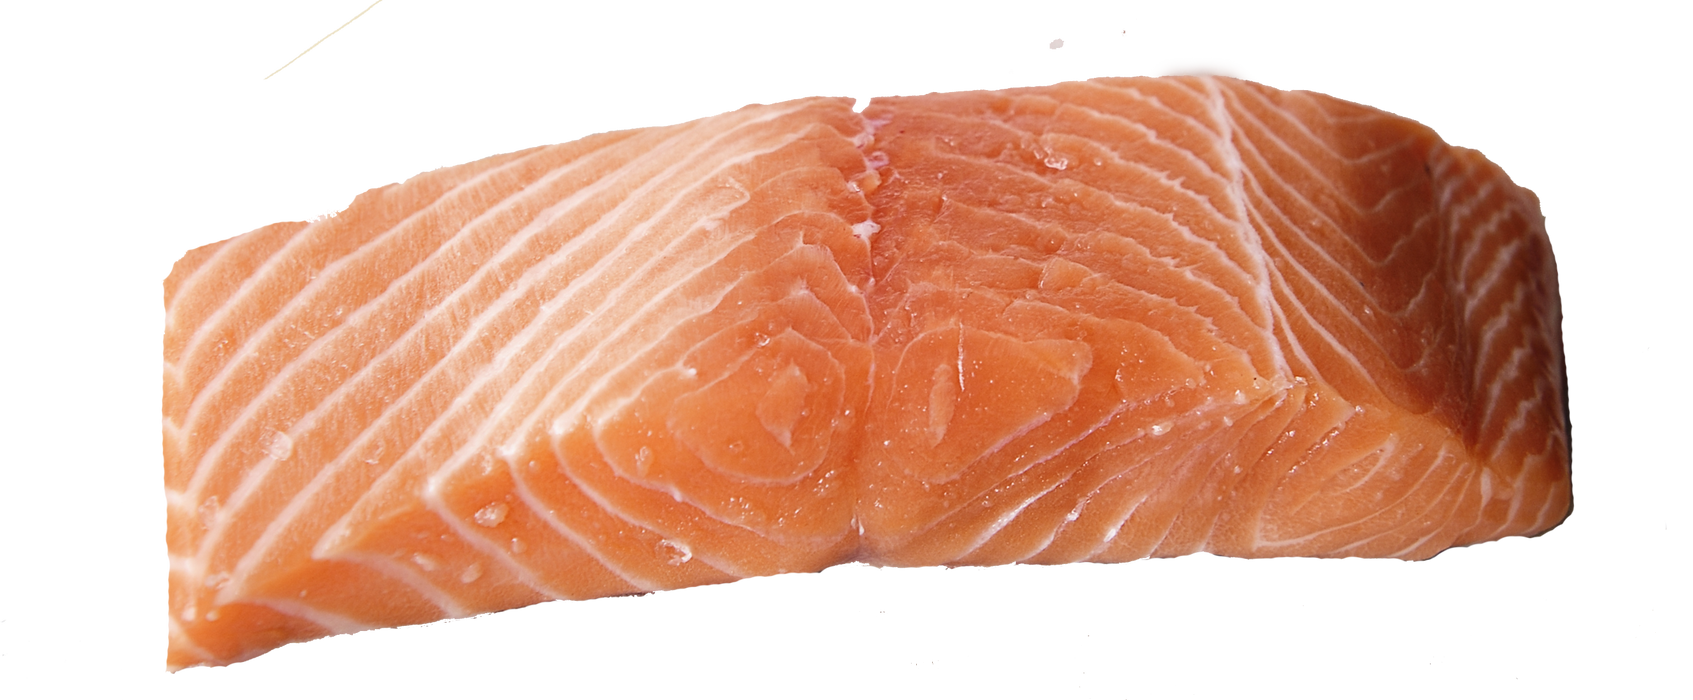 Skin Off Salmon Single Portion 150g/pc - Akaroa Fresh NZ King Salmon